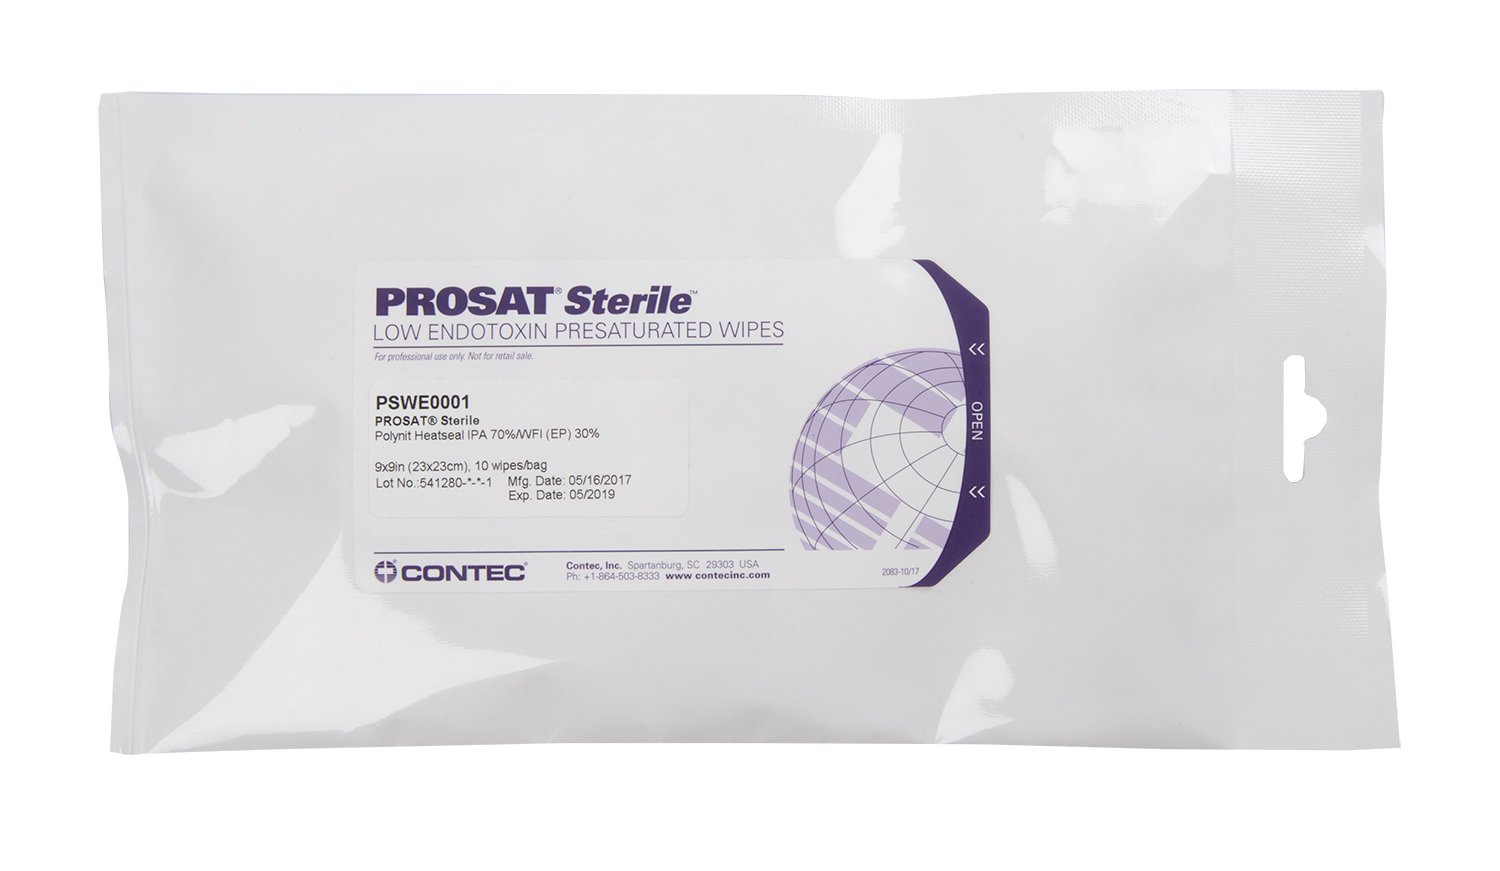 PROSAT Sterile™ Polynit Heatseal LE Wipes